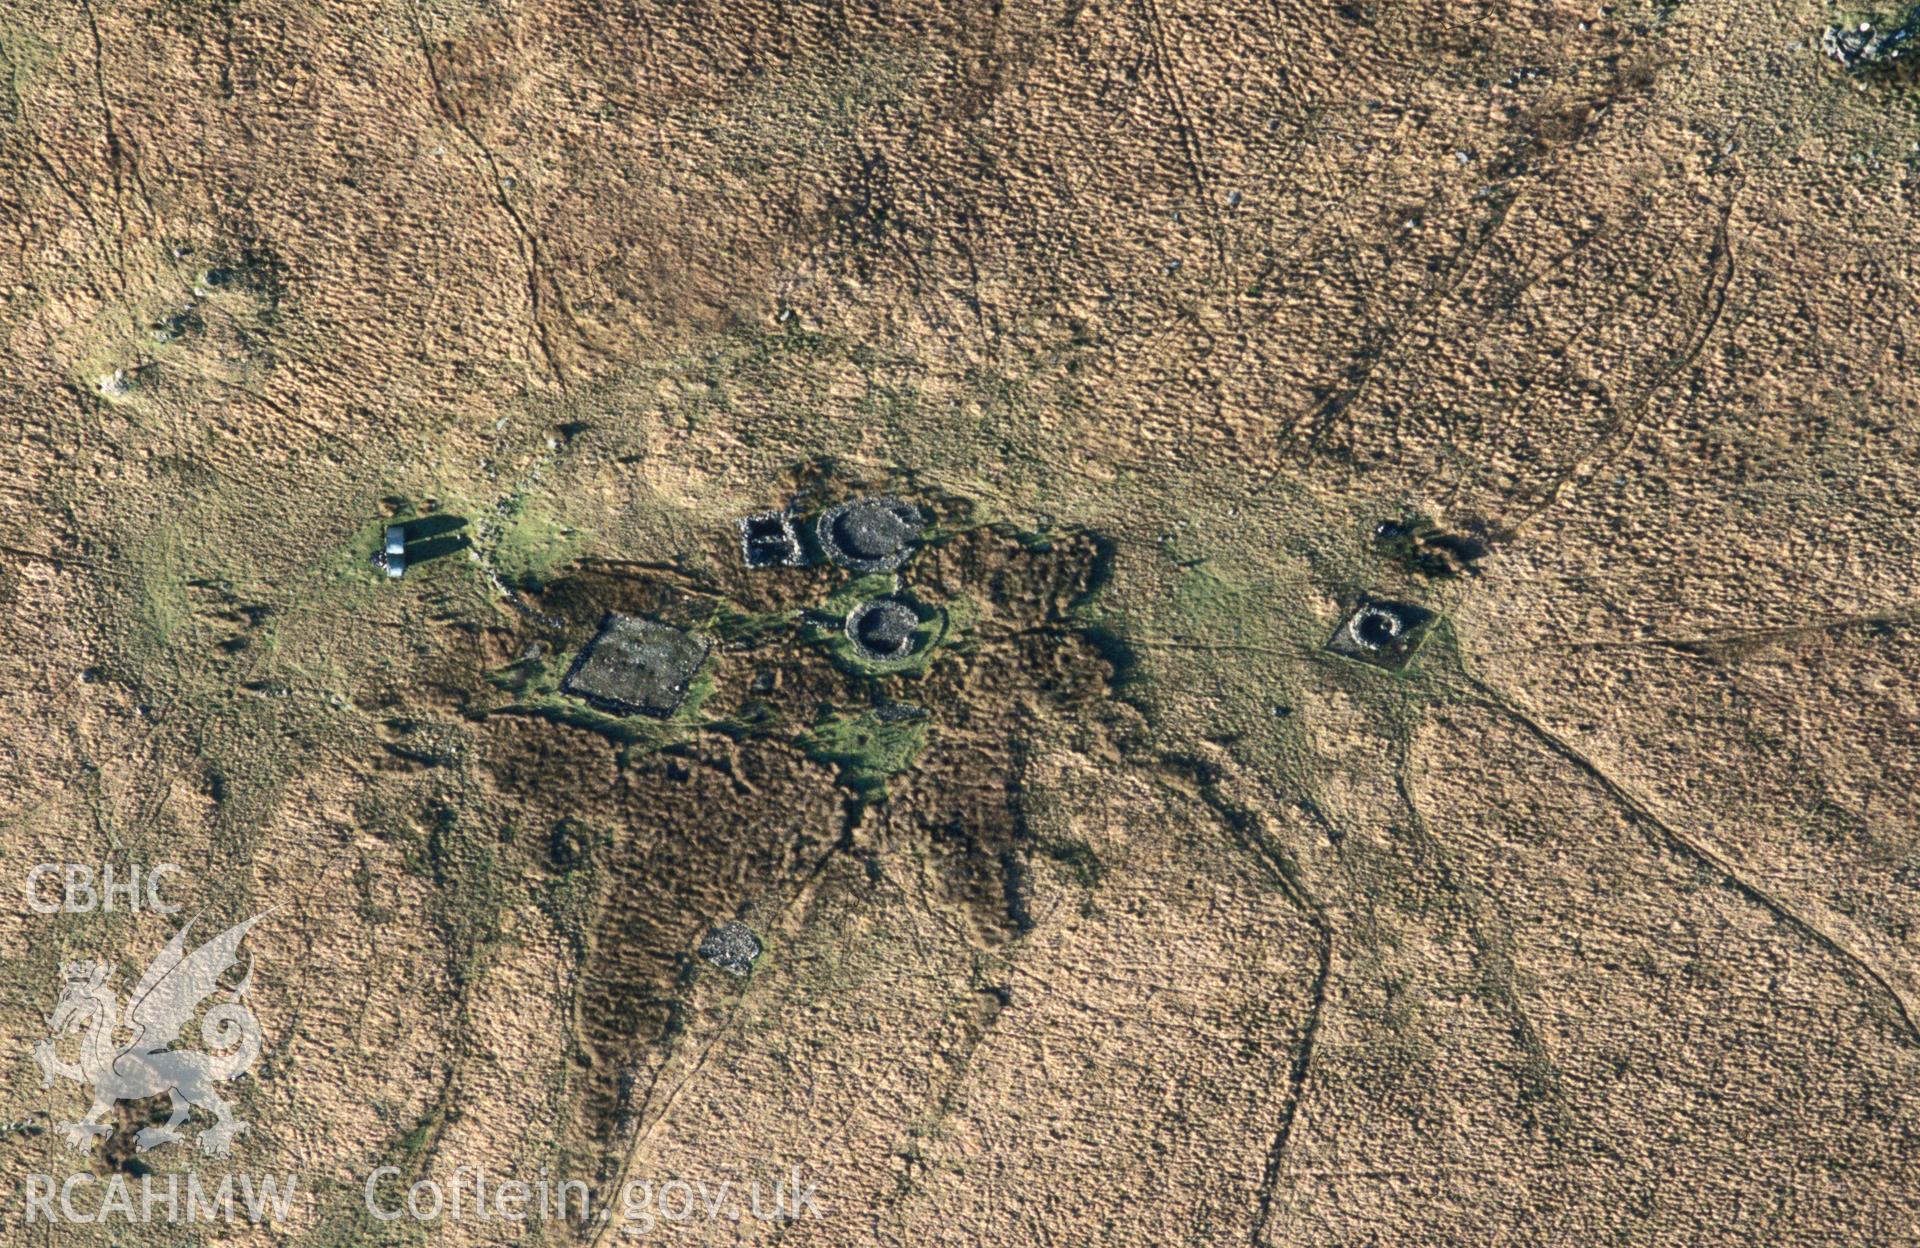 Slide of RCAHMW colour oblique aerial photograph of Crawcwellt, Settlement, taken by T.G. Driver, 17/12/2001.